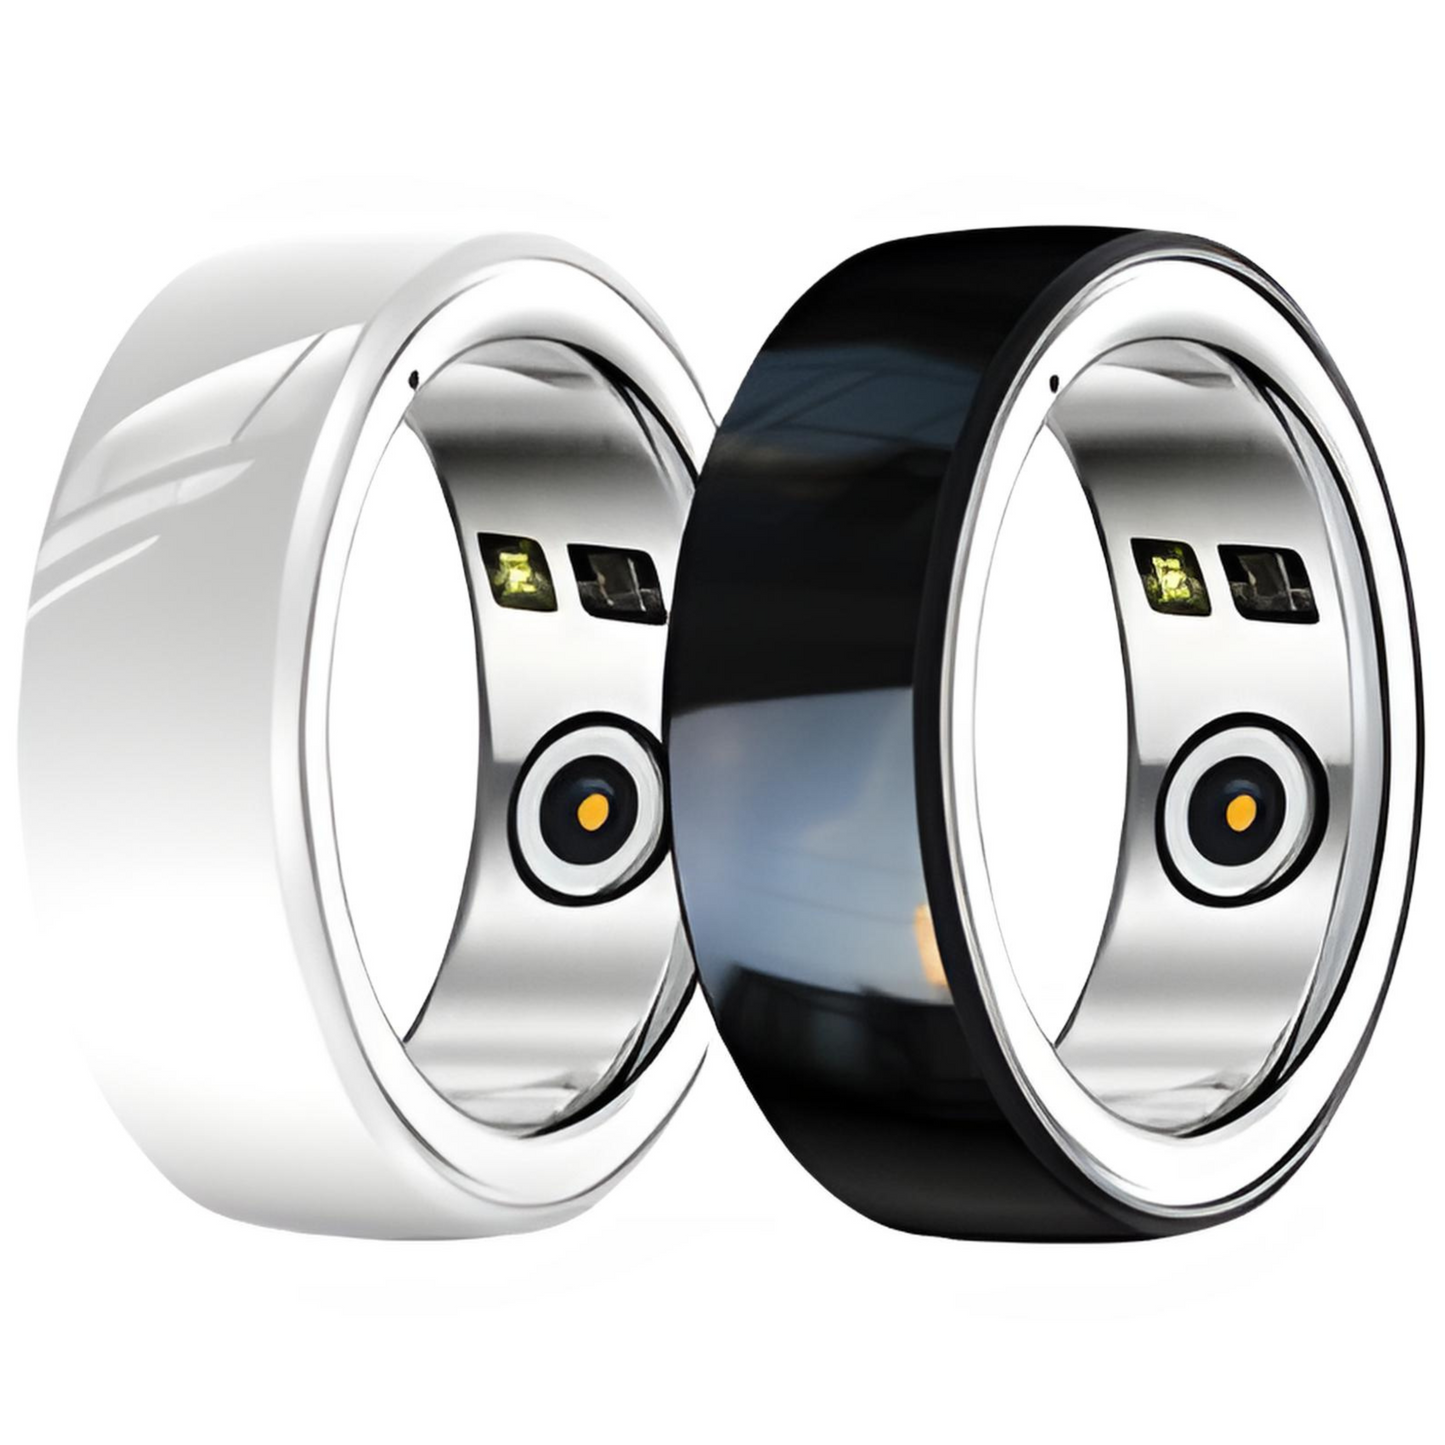 Smart Ring - Health, Sleep & Fitness Monitoring